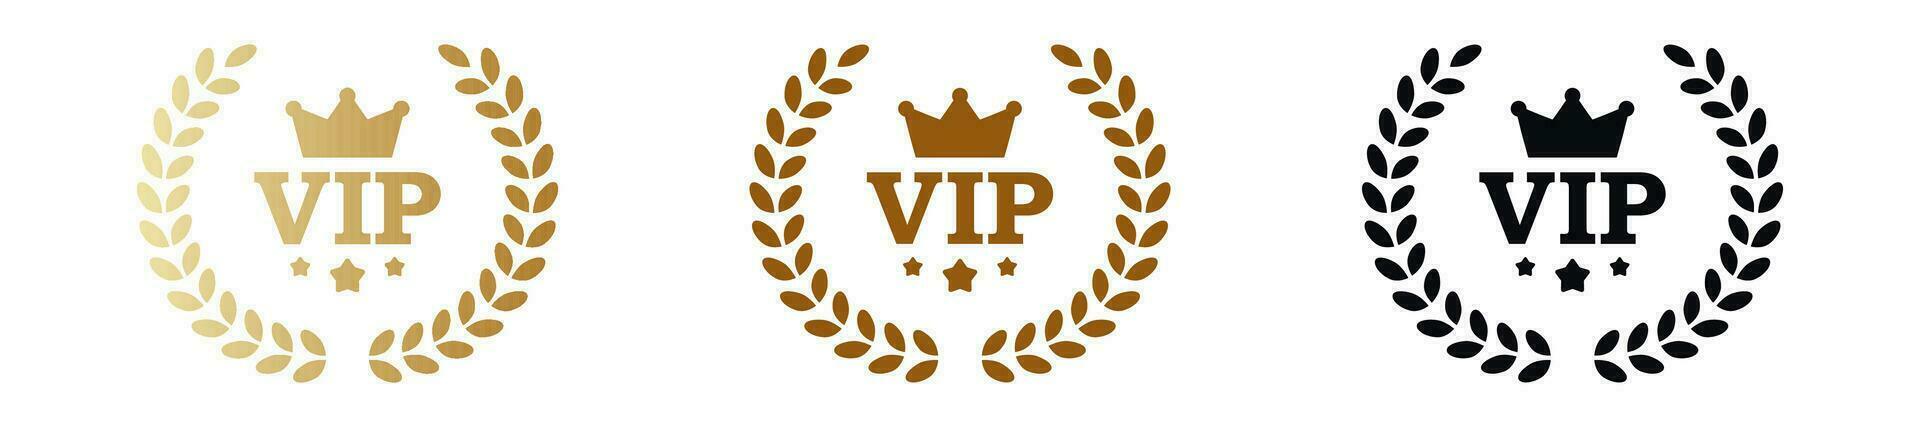 VIP usuario estampilla. prima miembro aprobar. vector